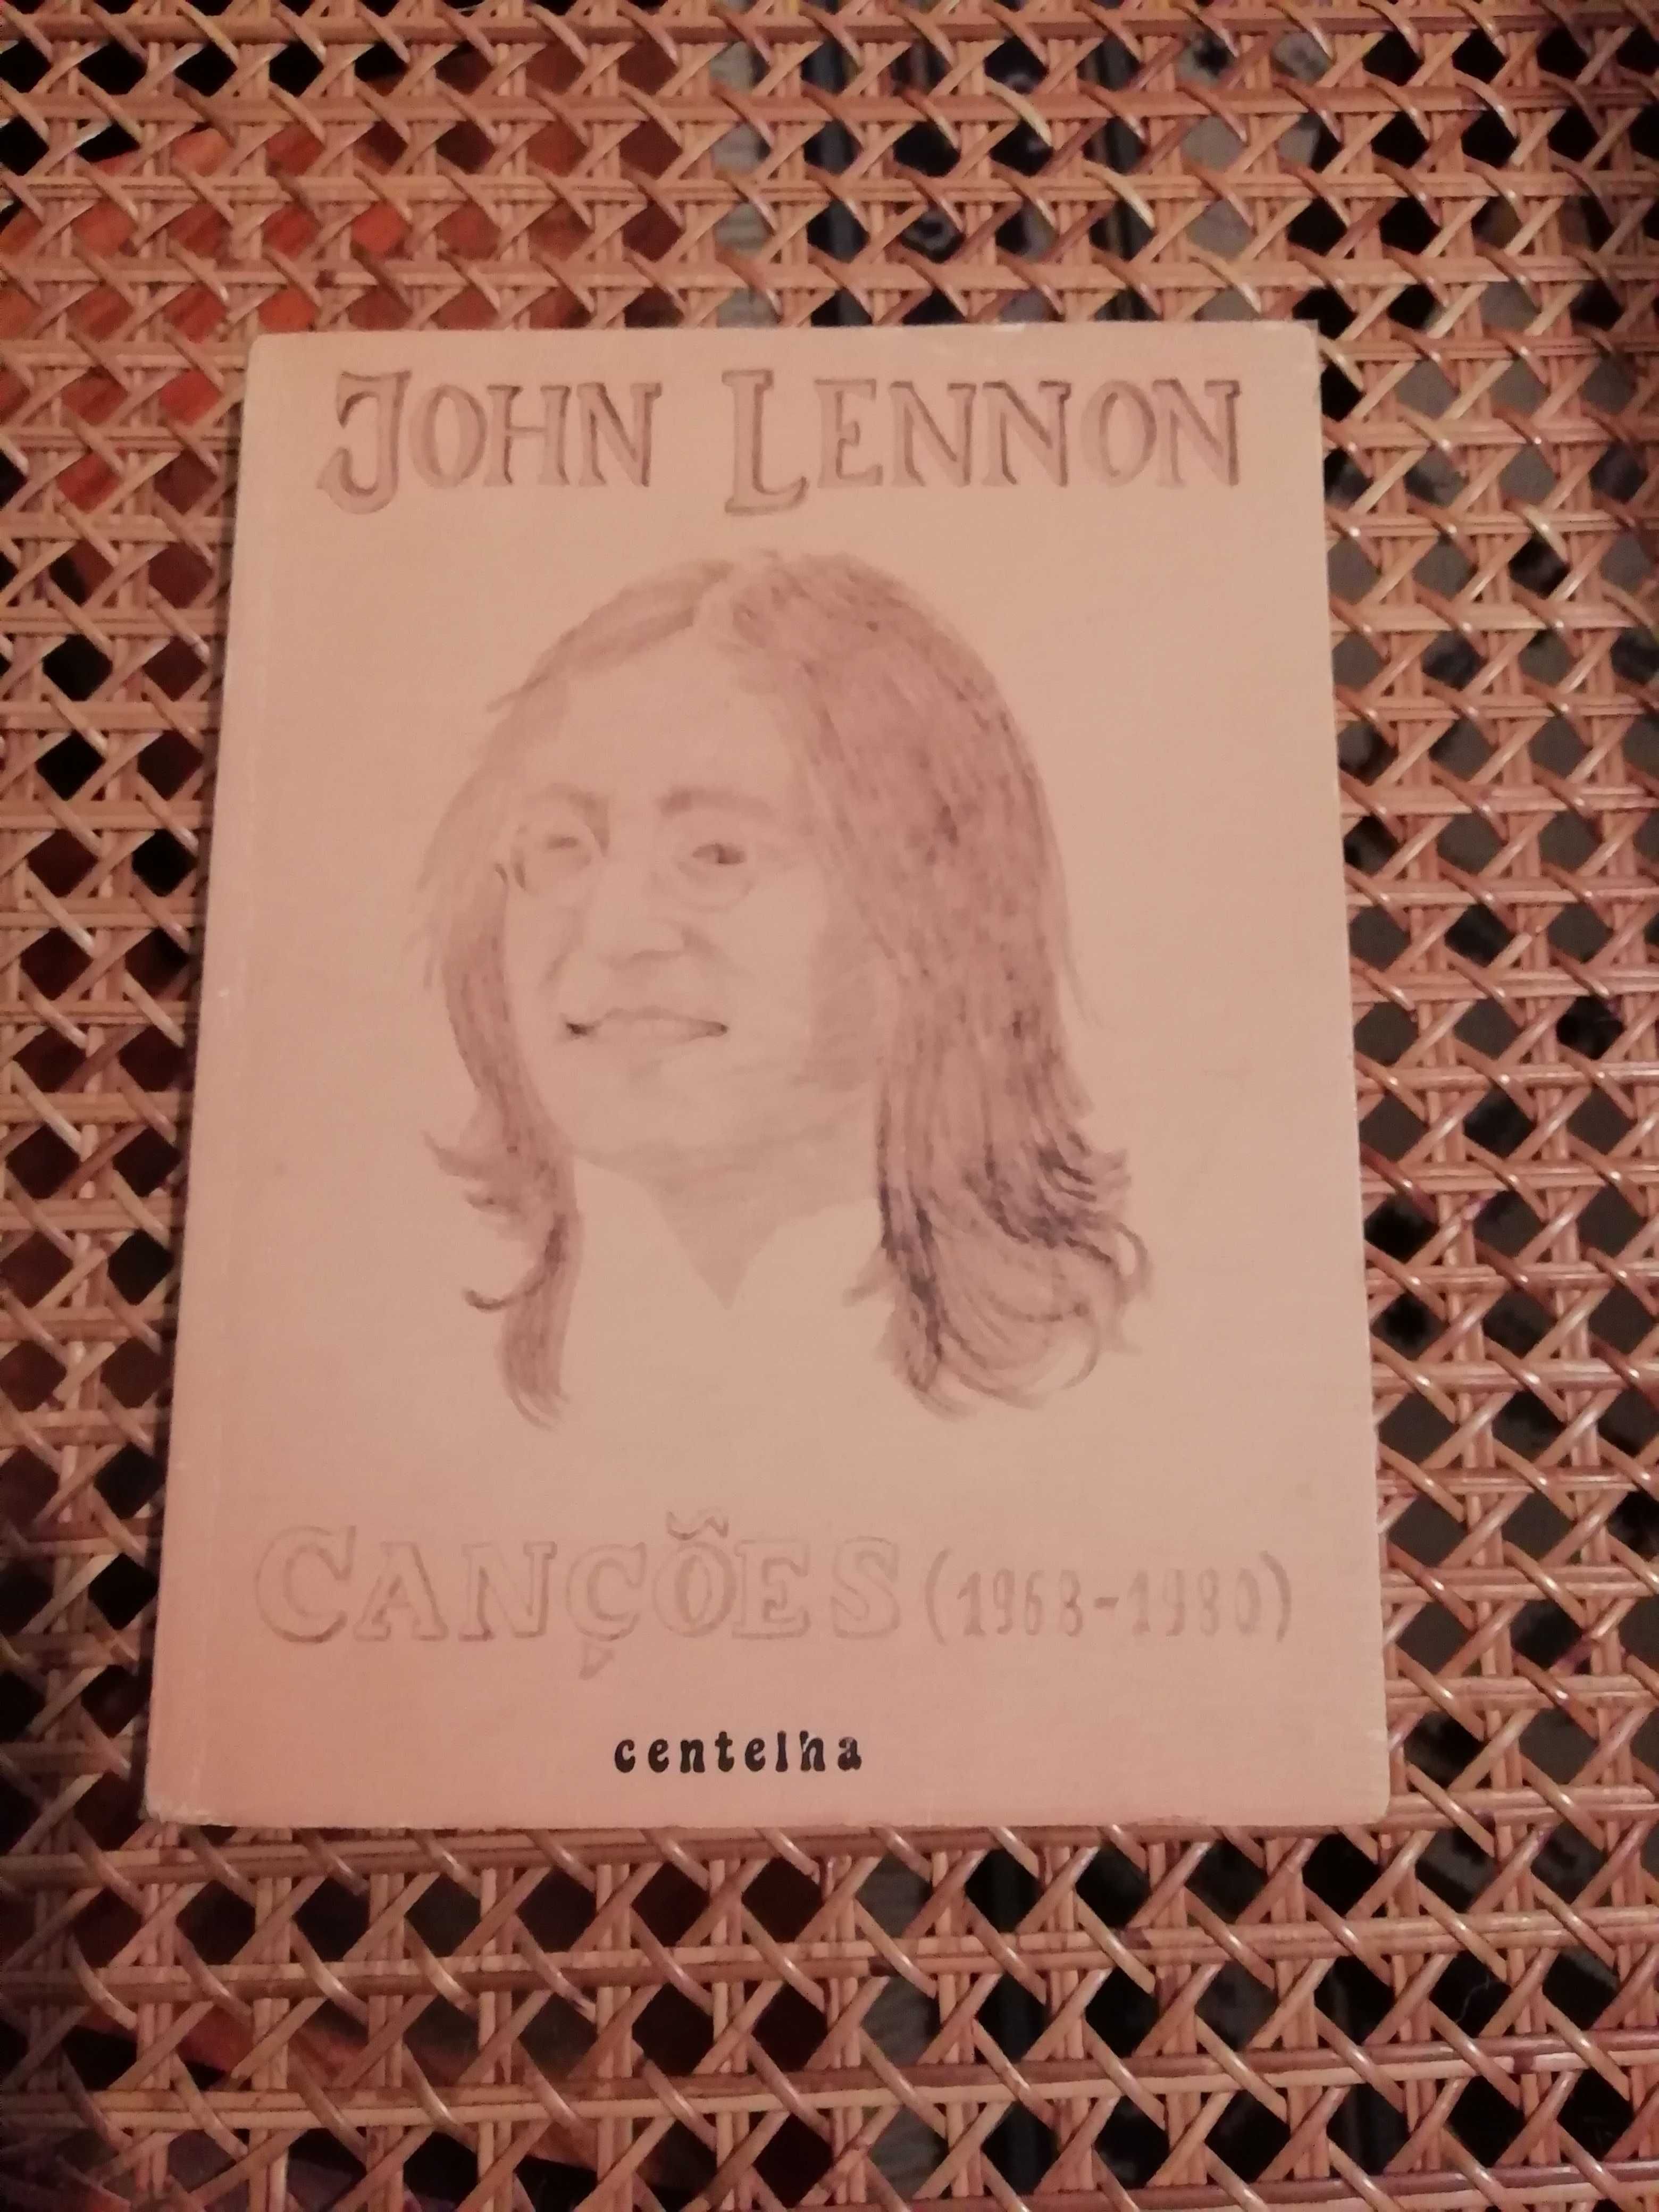 John Lennon, Canções